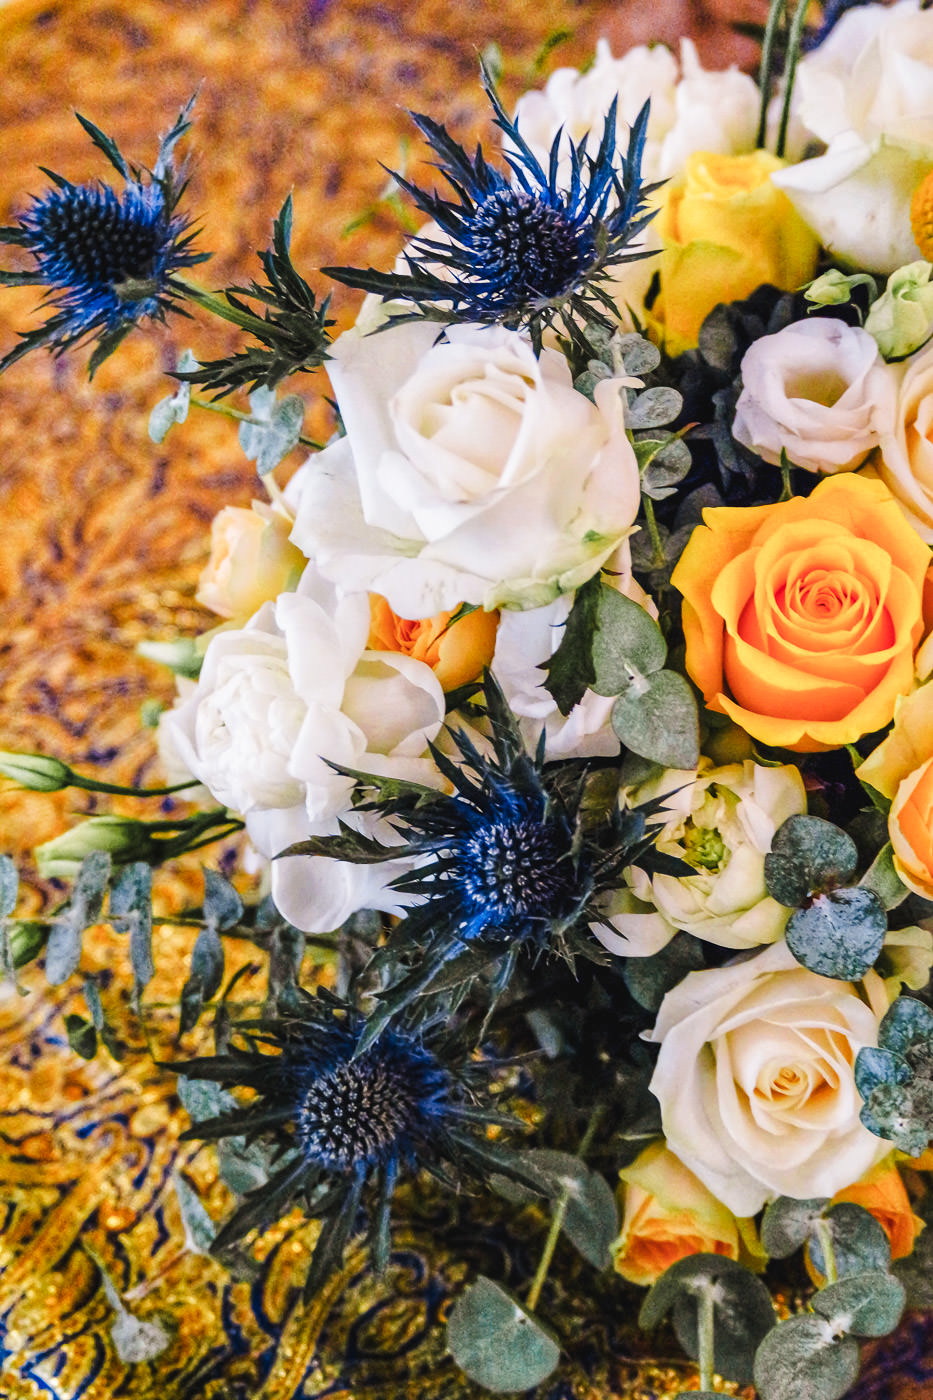 Susan&Sis decor svadobna vyzdoba - dekorovanie- luxusna zlato modra svadba